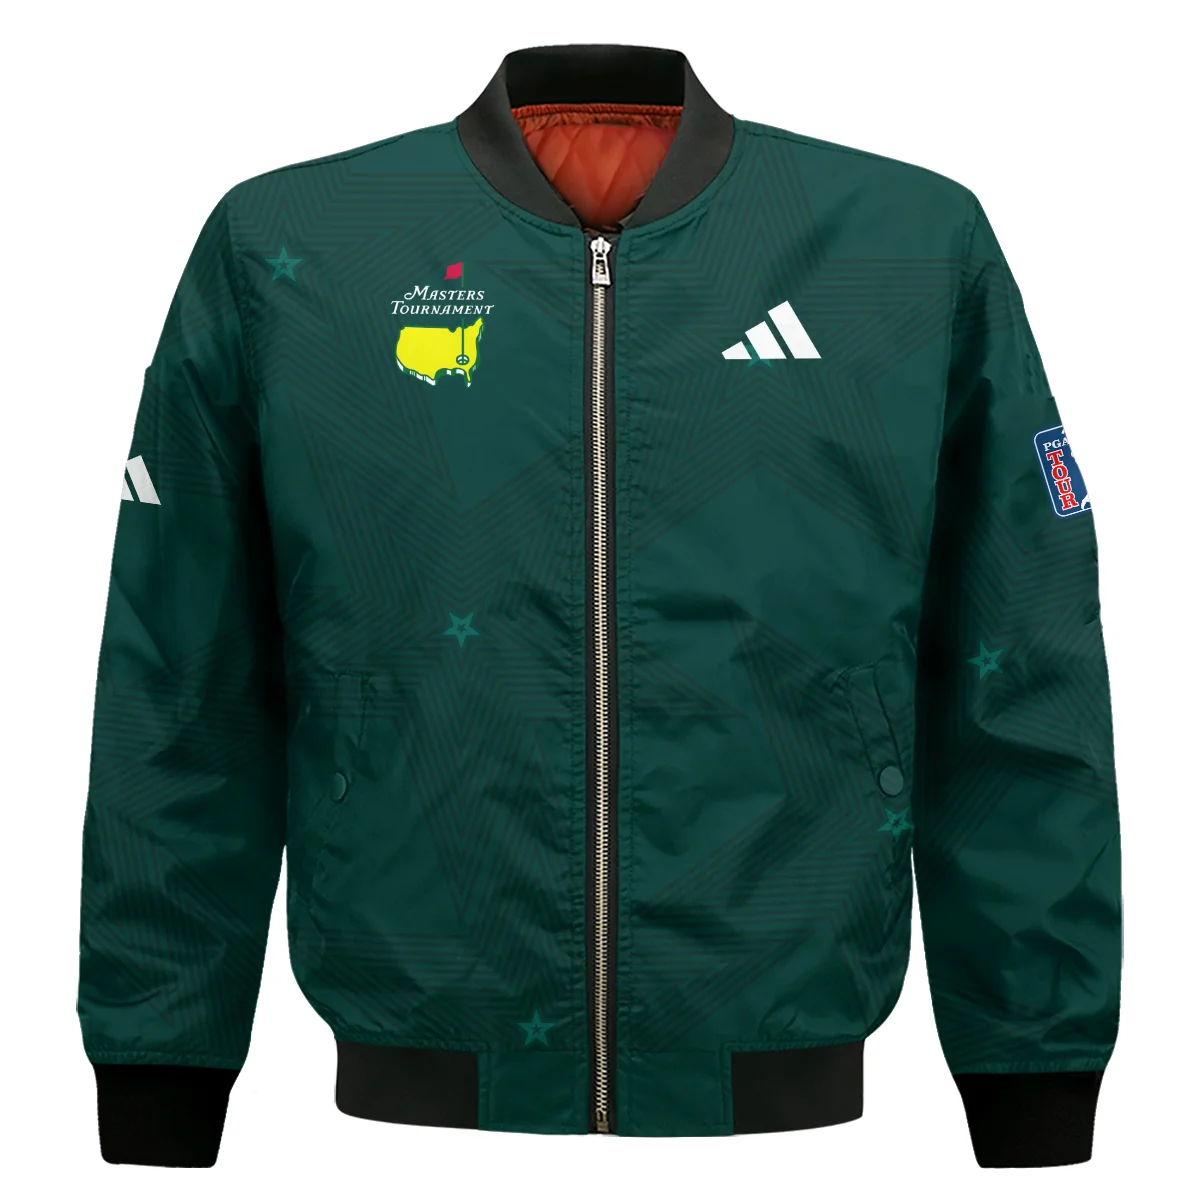 Golf Pattern Stars Dark Green Masters Tournament Adidas Zipper Polo Shirt Style Classic Zipper Polo Shirt For Men